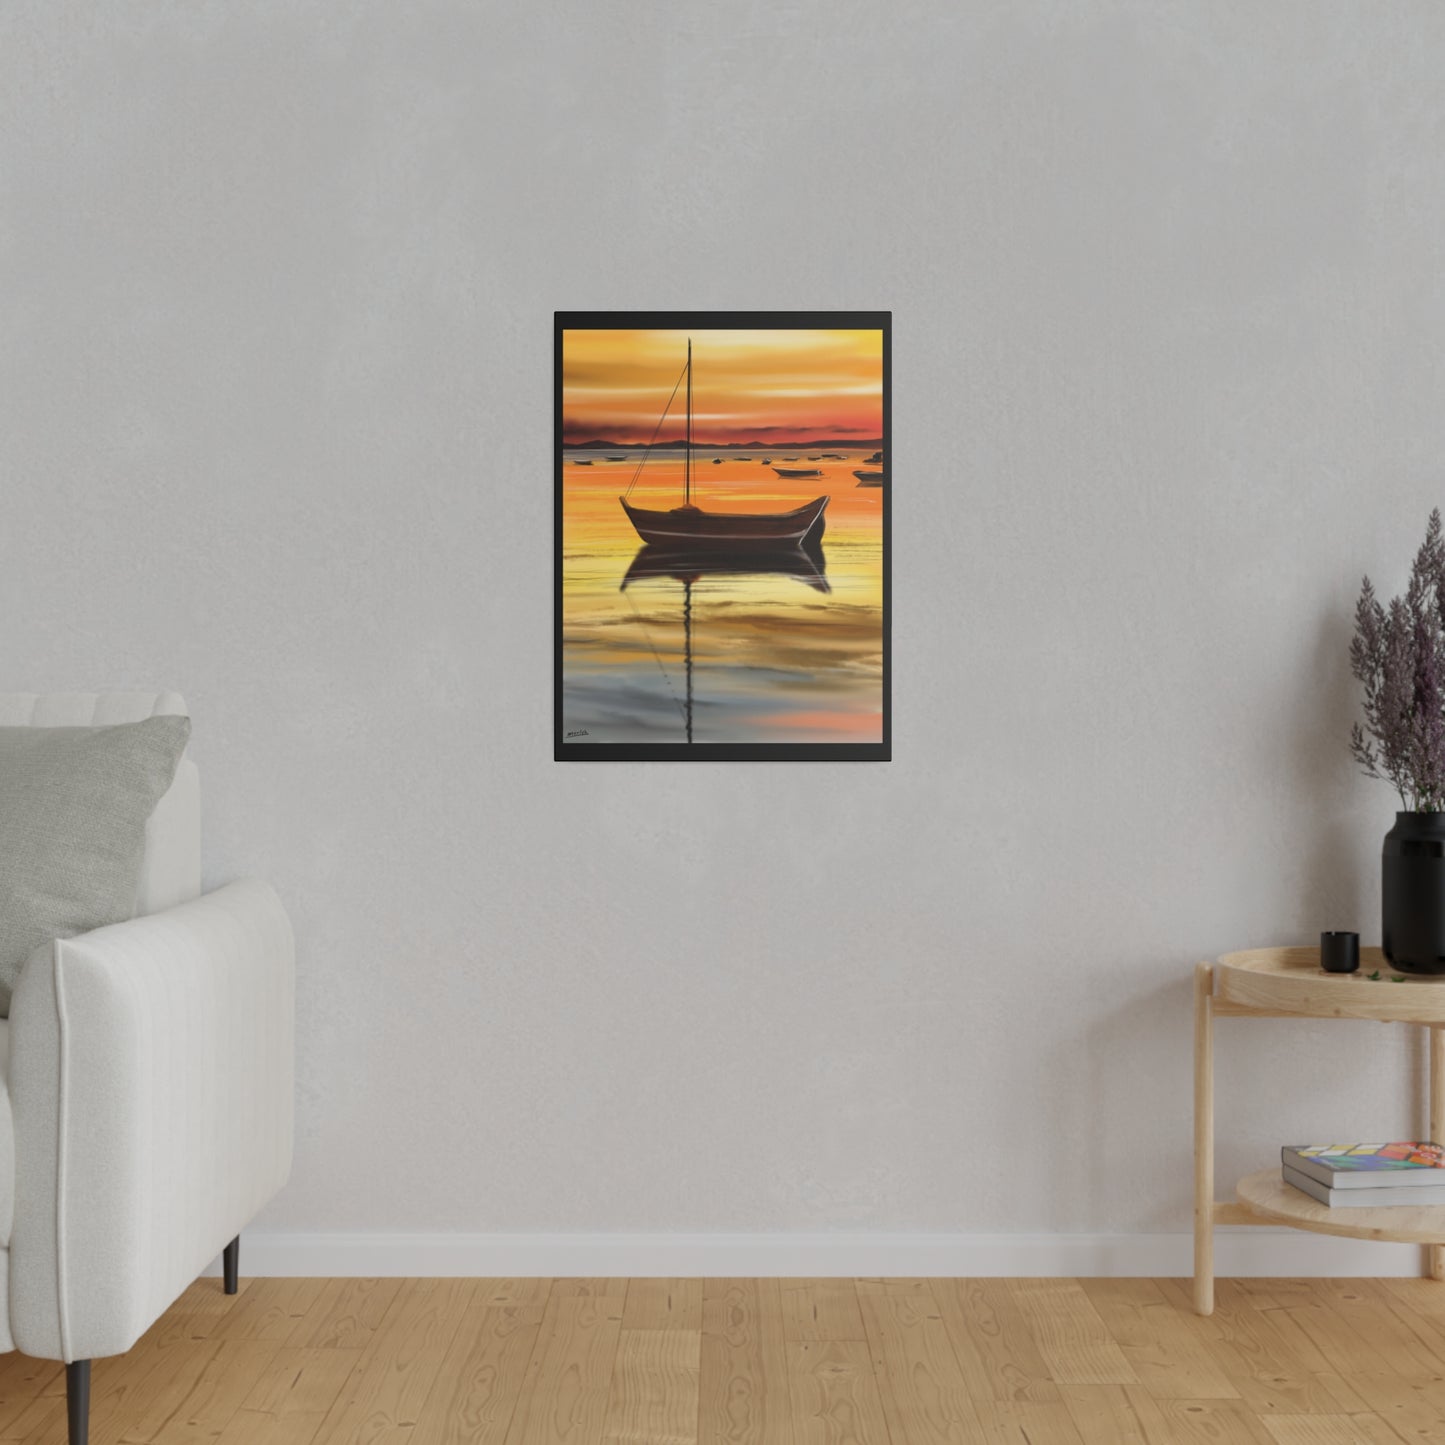 A Serene Sunset - Canvas Print